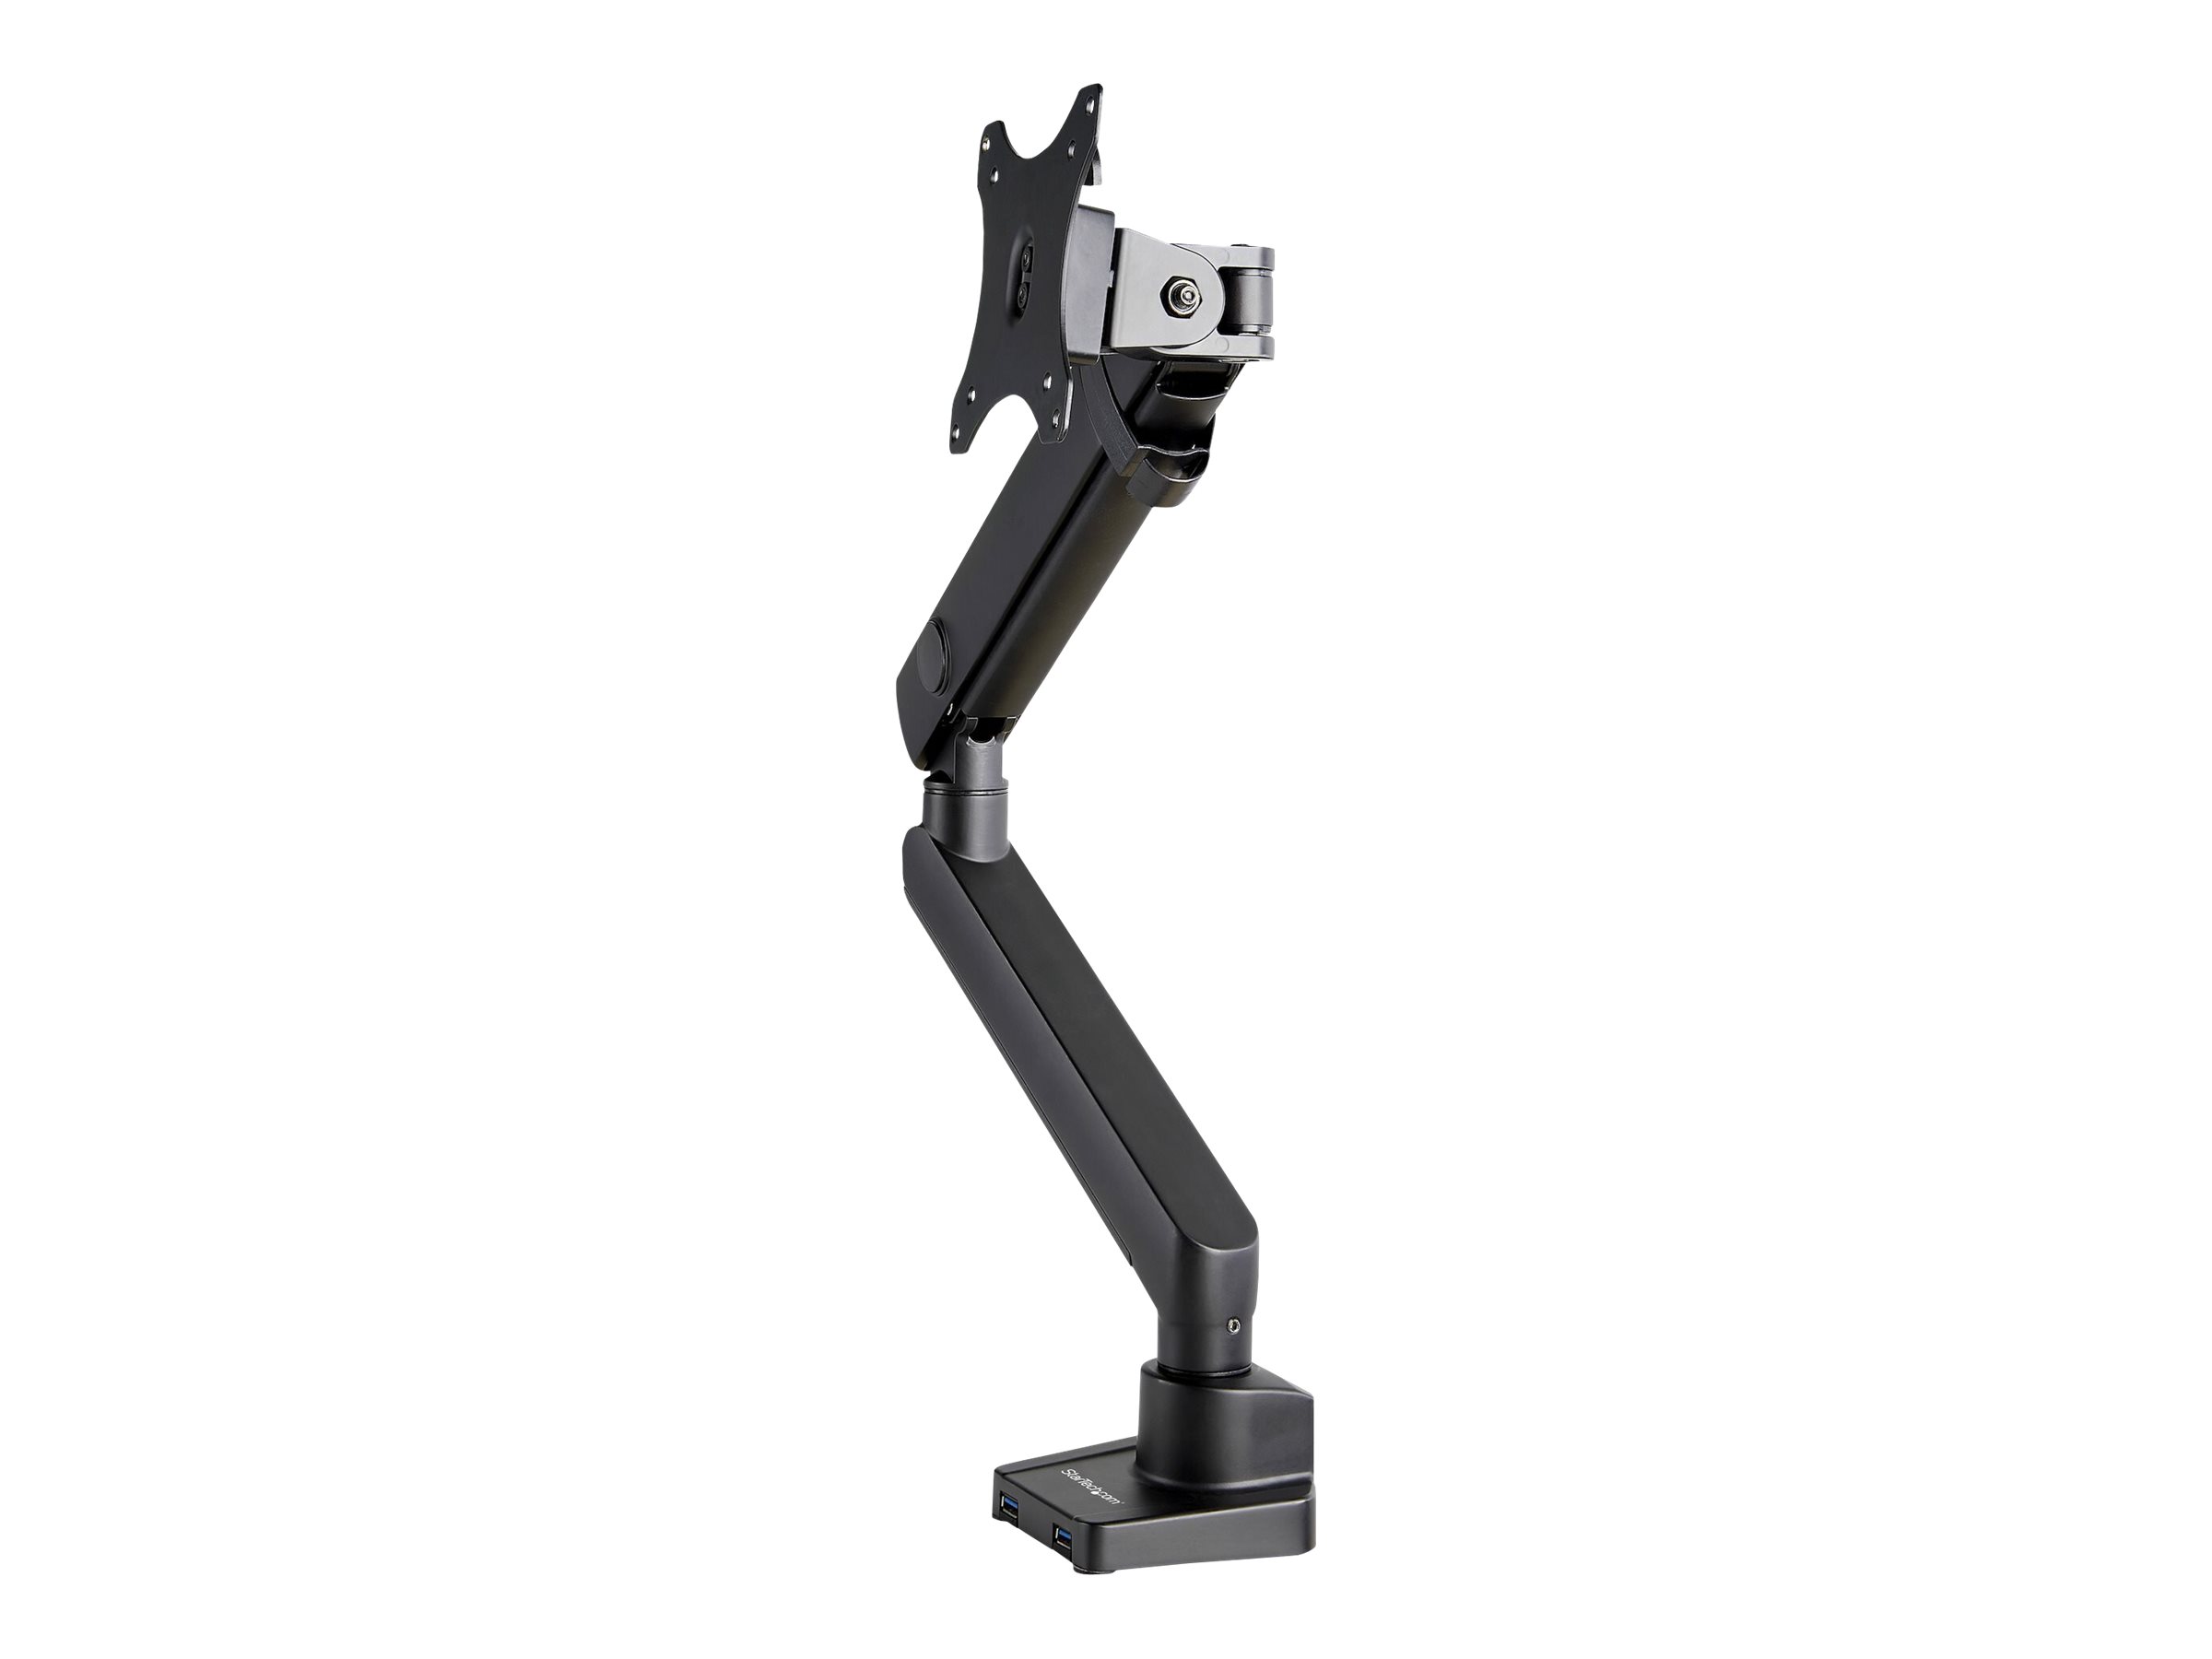 StarTech.com Desk Mount Monitor Arm with 2x USB 3.0 ports, Slim Full Motion Adjustable Single Monitor VESA Mount up to 17.6lbs (8kg)